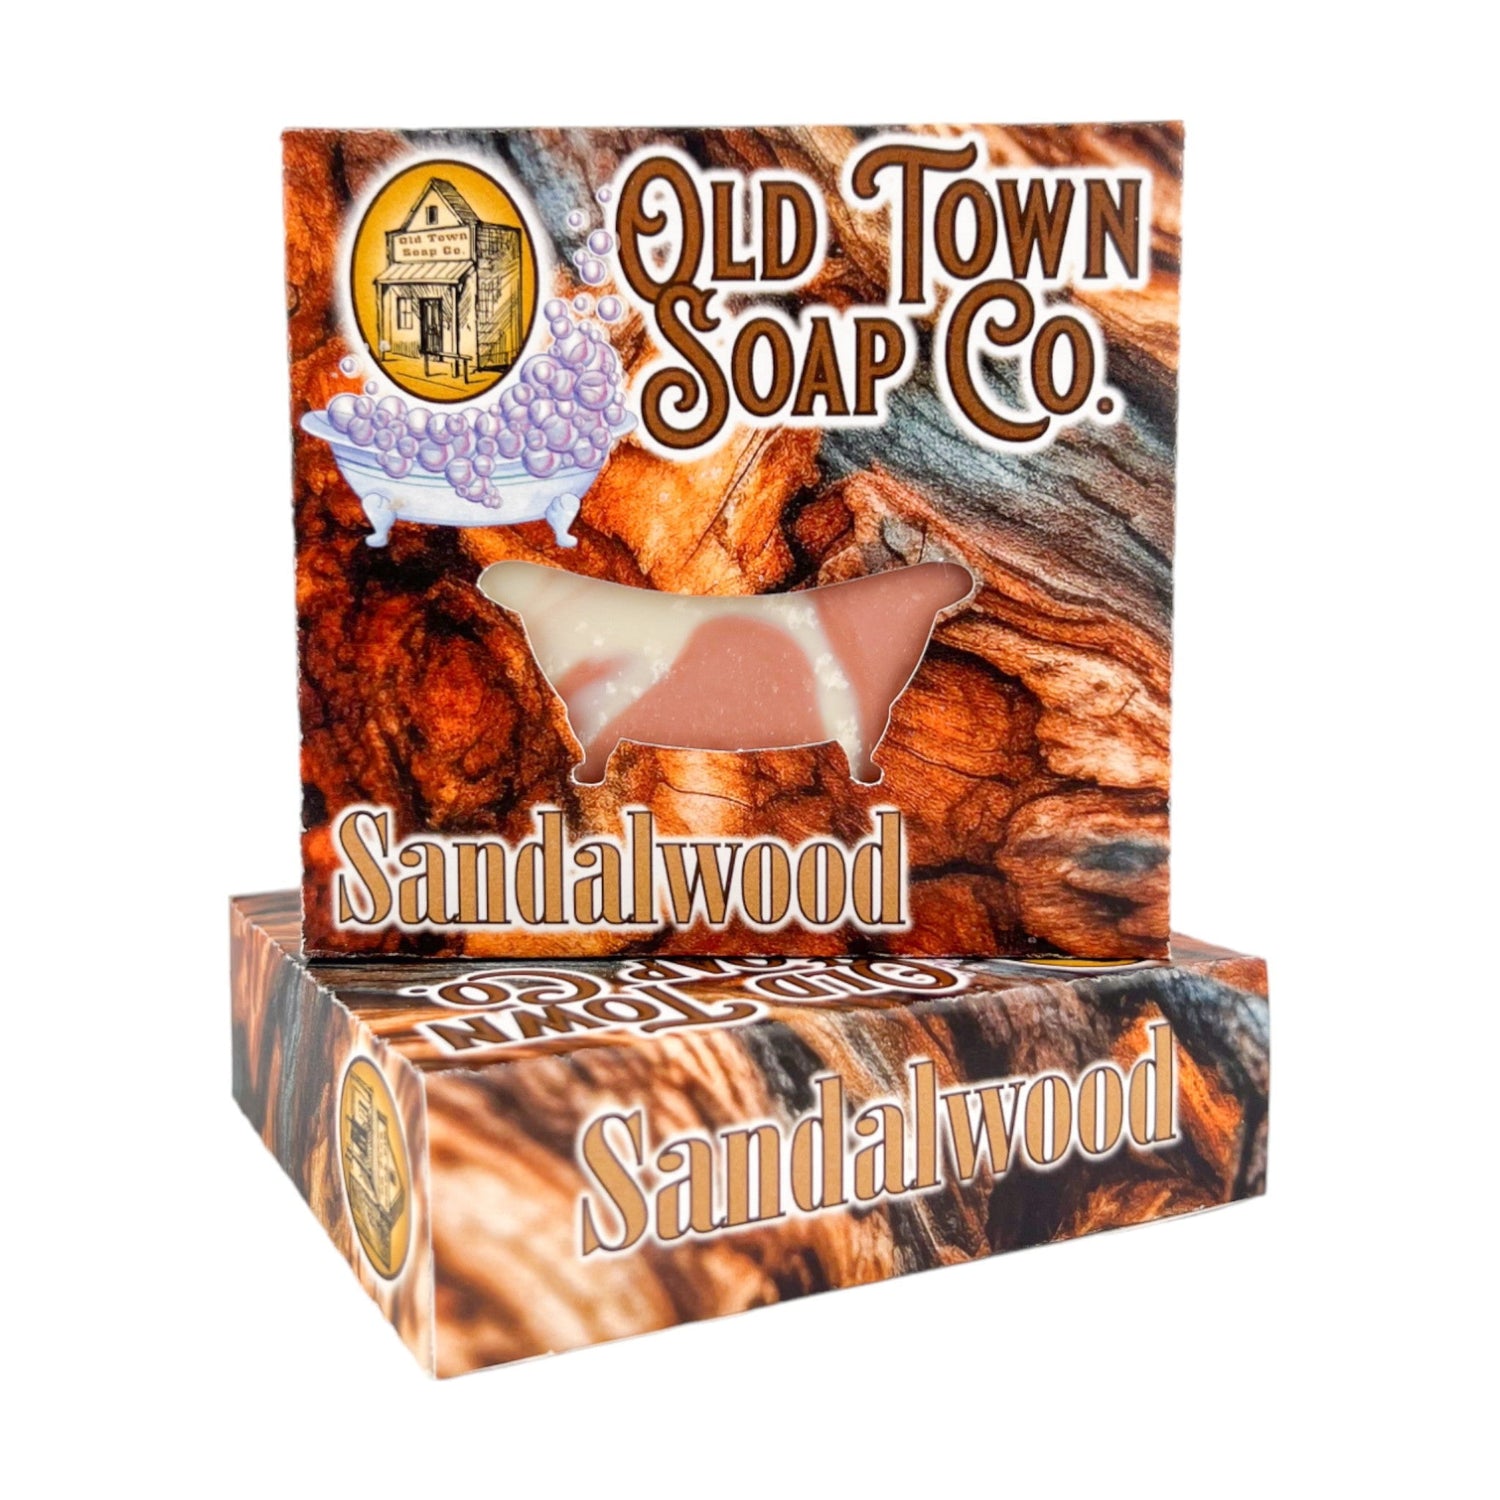 Sandalwood -Bar Soap - Old Town Soap Co.